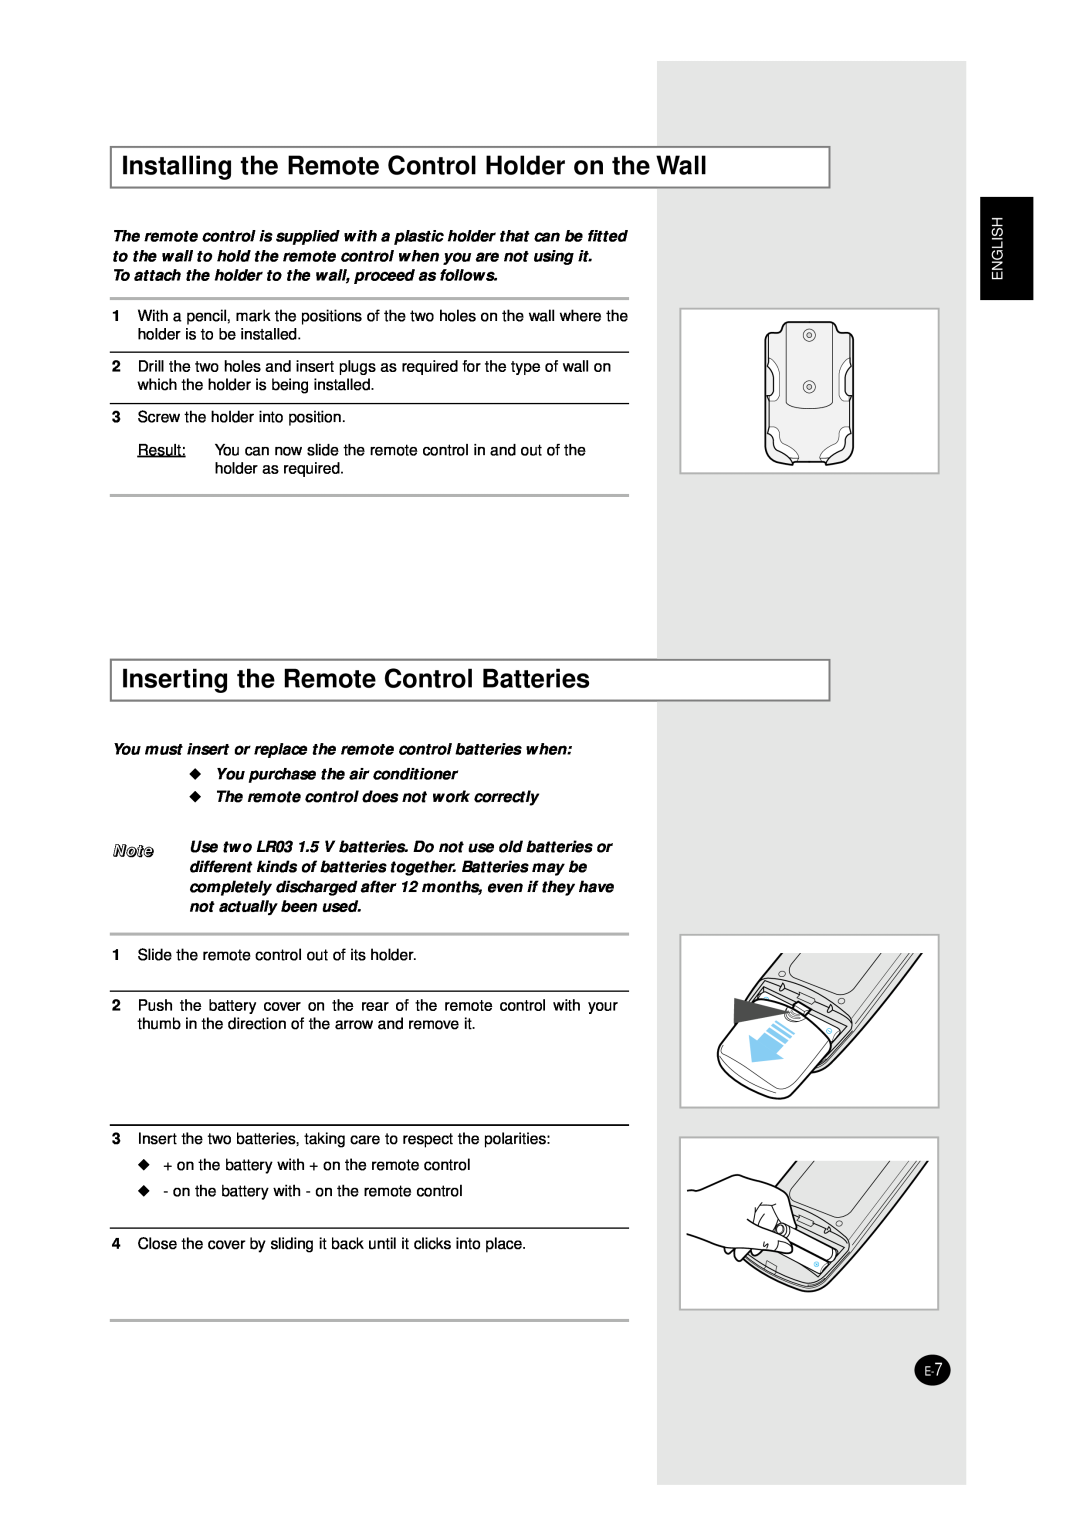 Samsung ASHM070VE Installing the Remote Control Holder on the Wall, Inserting the Remote Control Batteries, English 